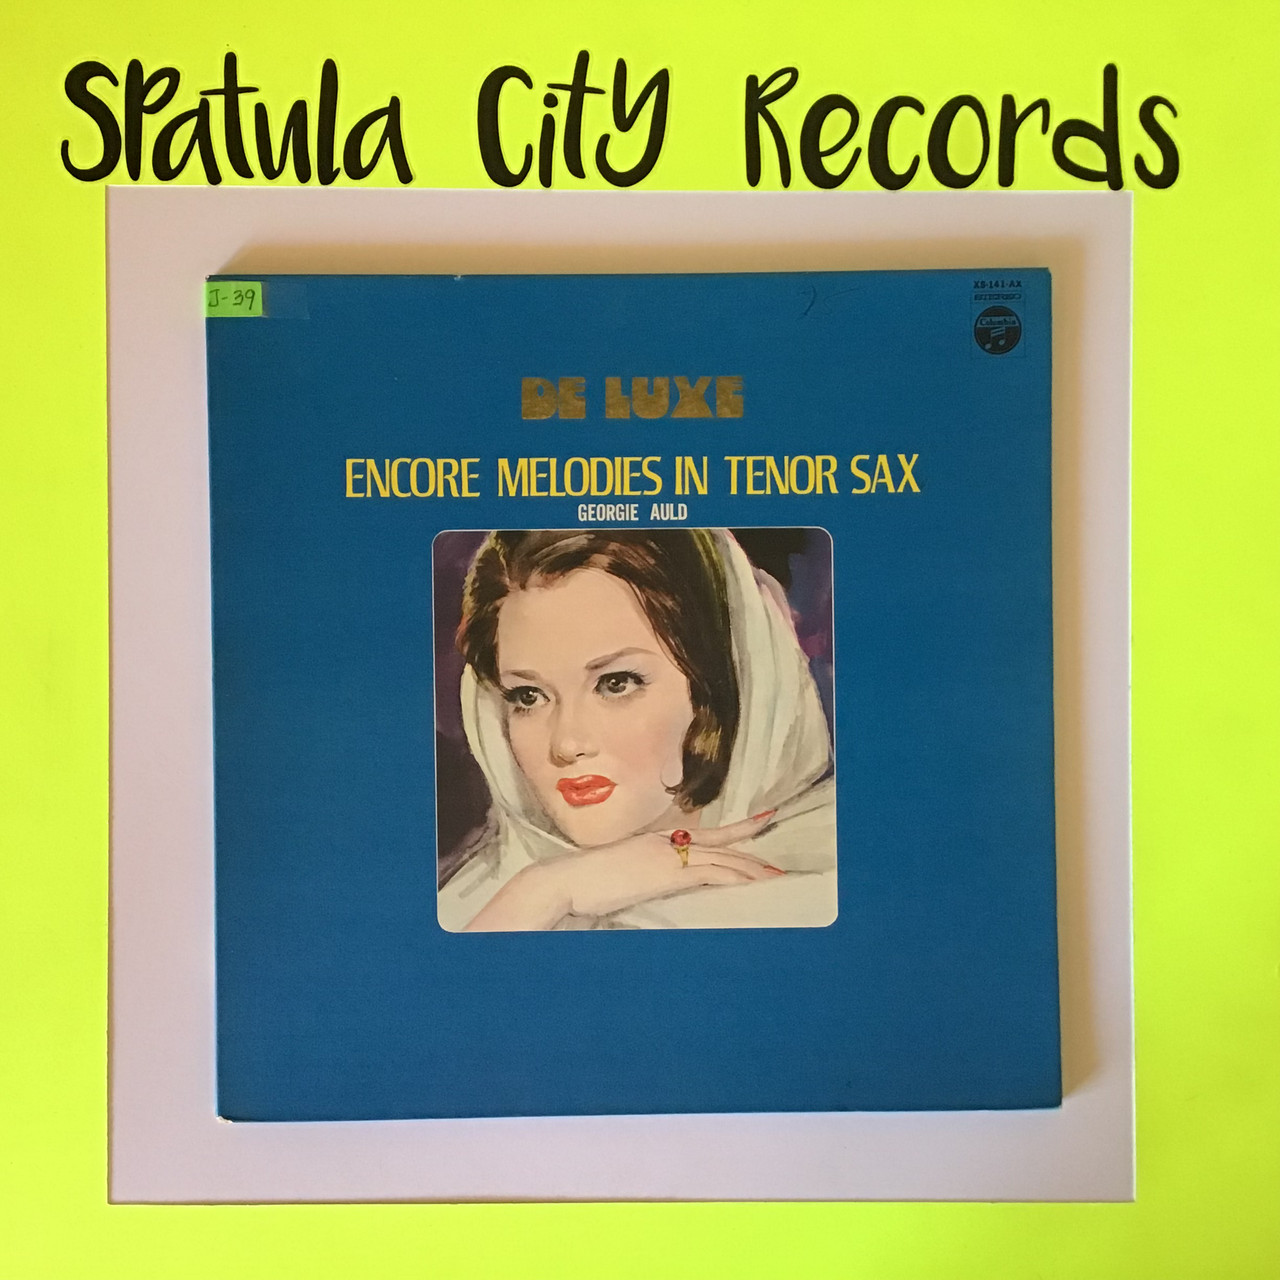 Georgie Auld - Encore Melodies in Tenor Sax - vinyl record album LP